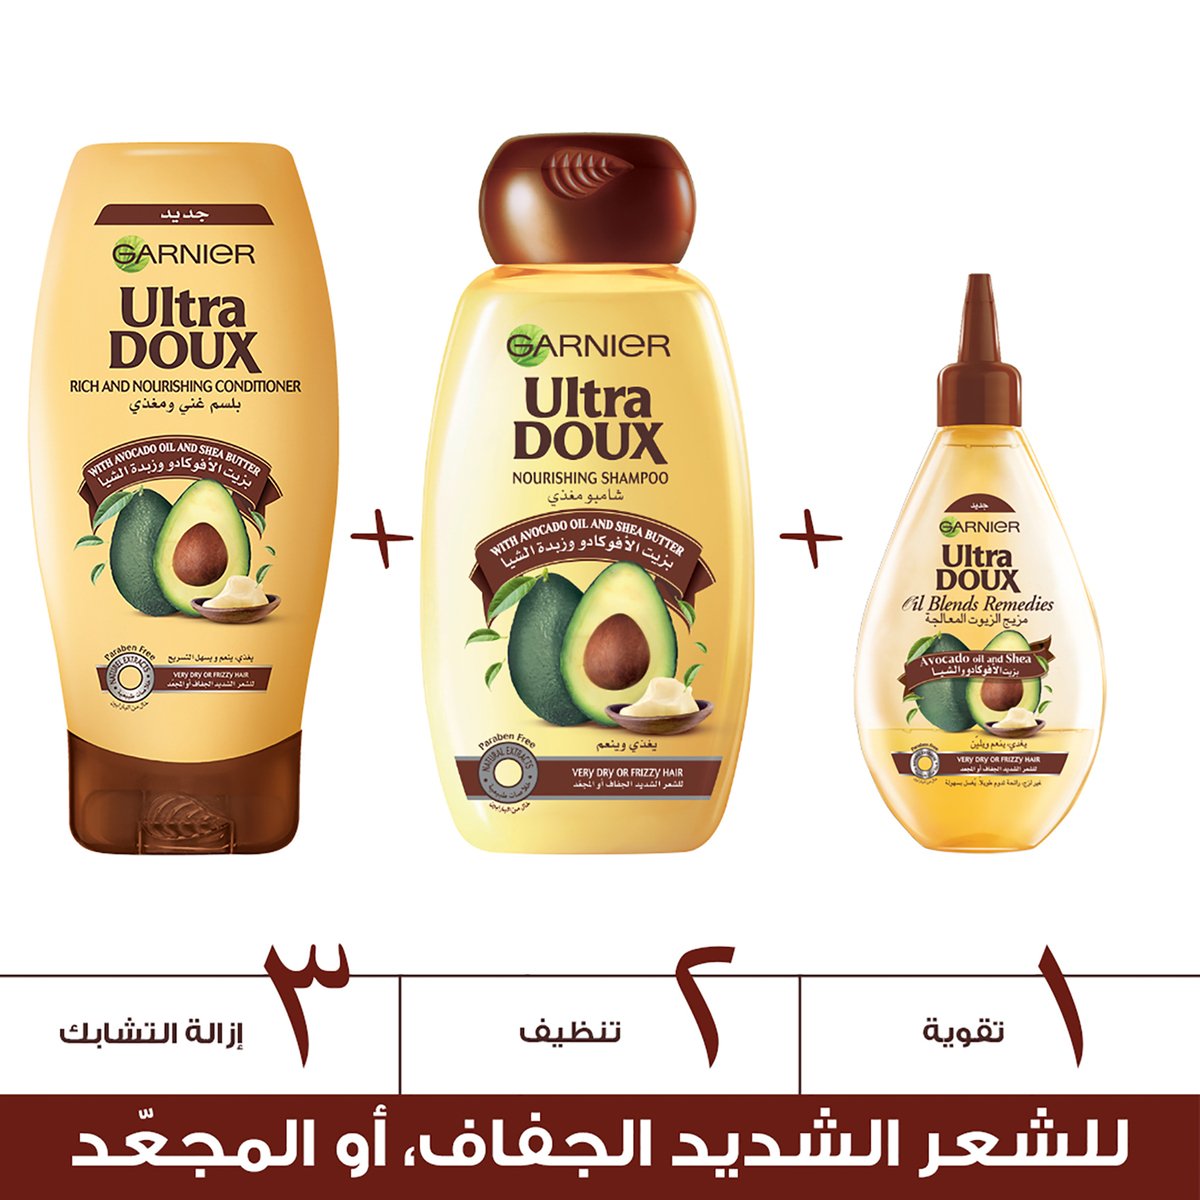 Garnier Ultra Doux Avocado Oil & Shea Butter Bi-Phase Oil 140 ml